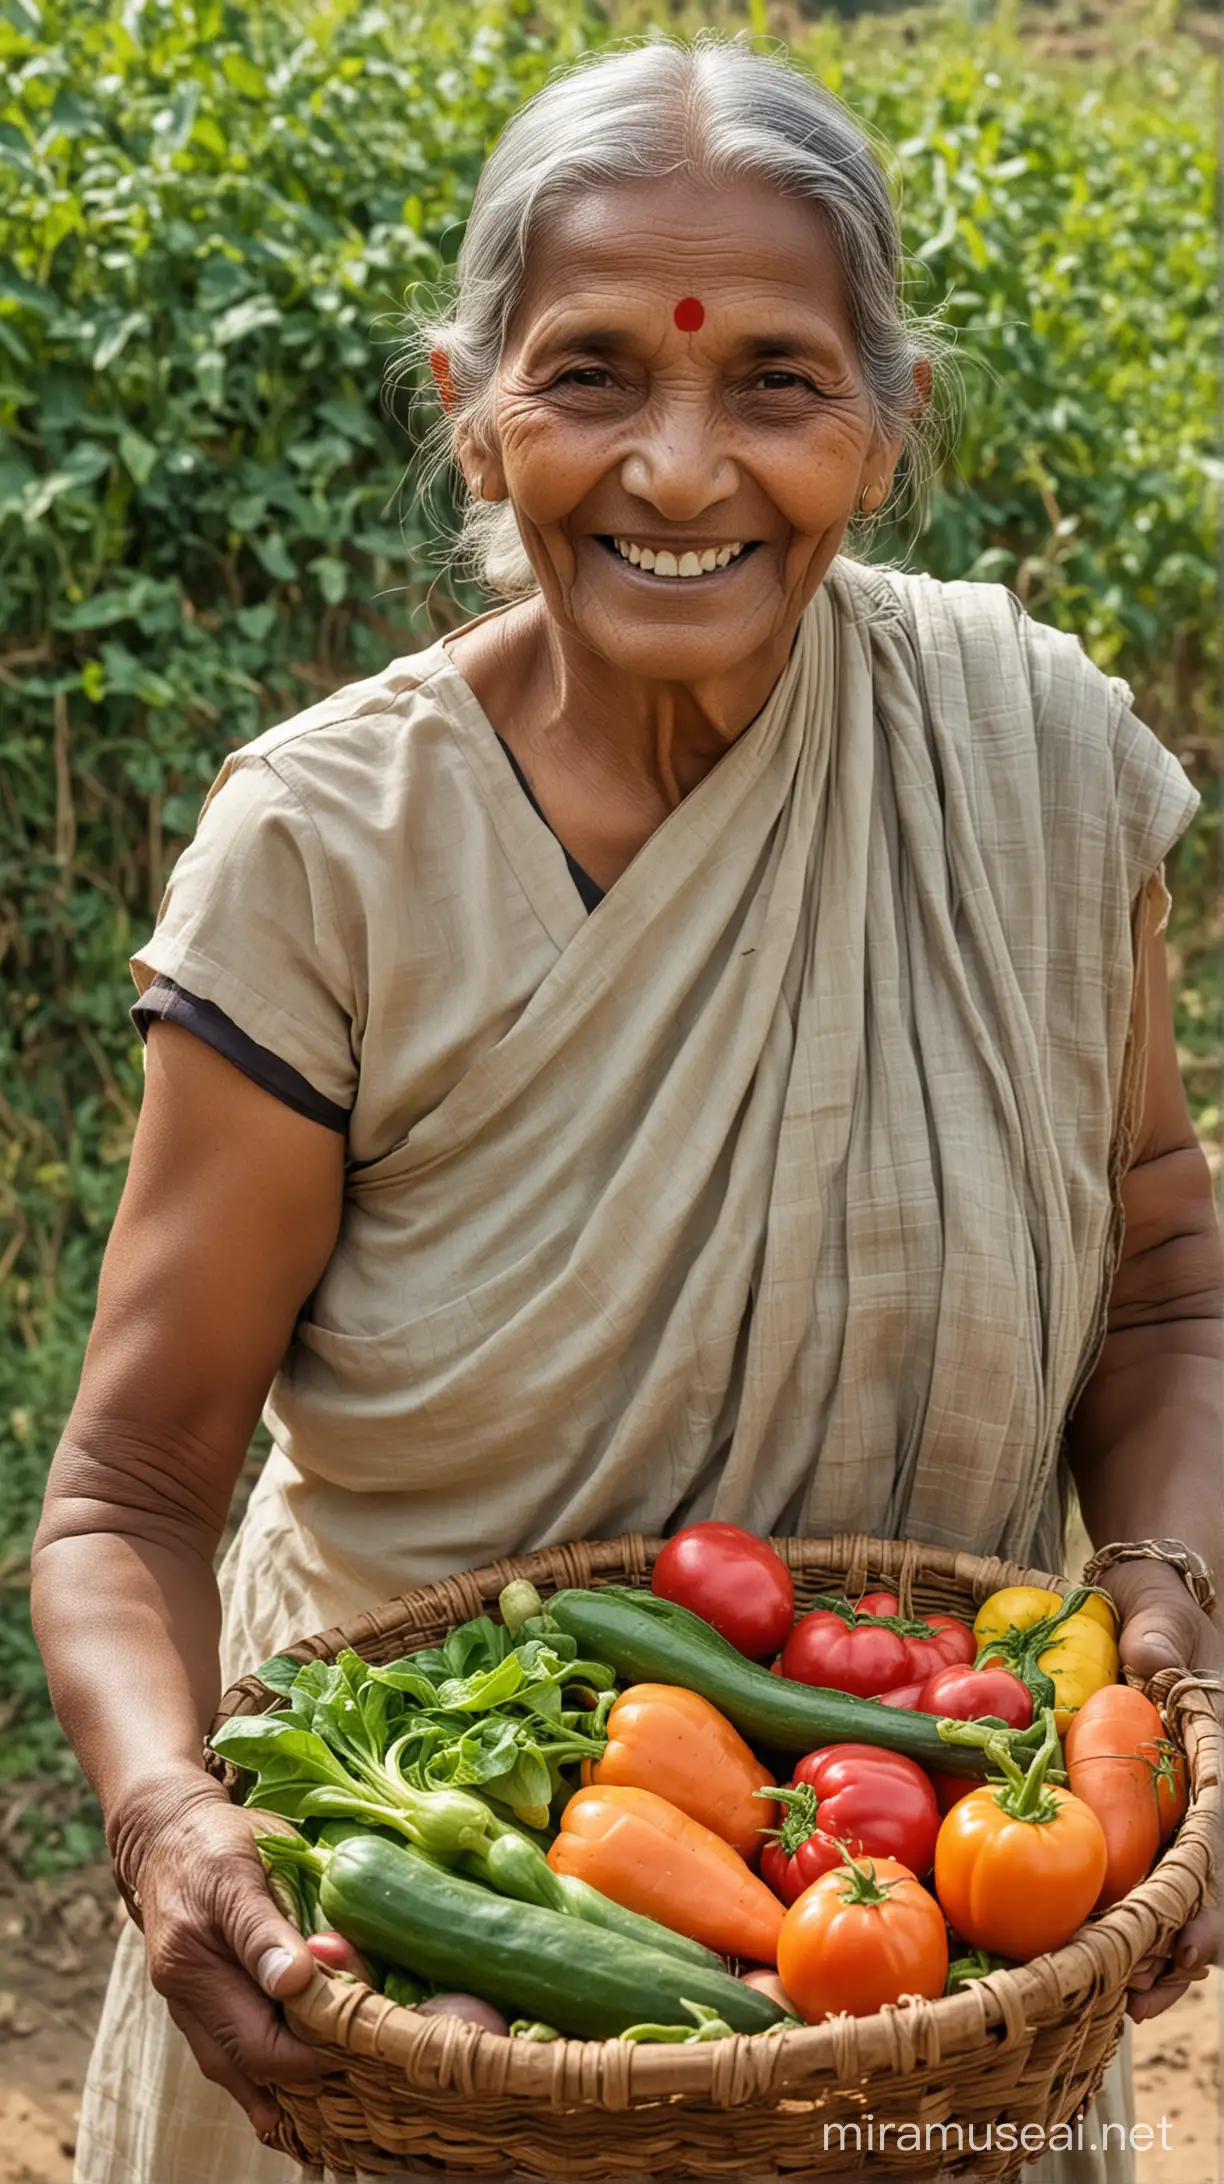 Smiling Old Indian Woman Holding Wooden Basket of Fresh Vegetables